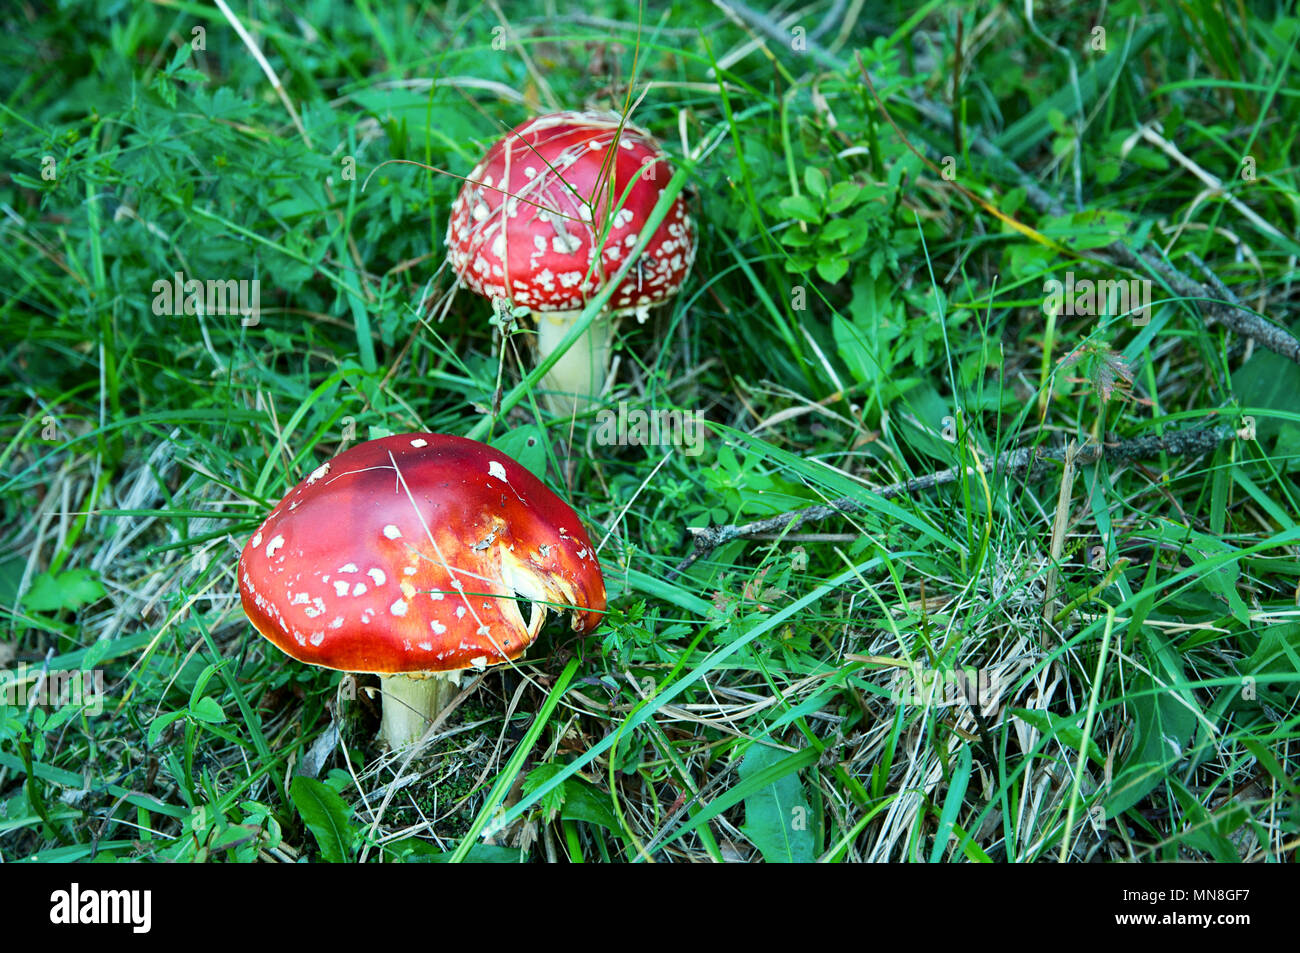 Amanita giftigen Pilze in der Natur. Zwei rote Pilze im grünen Gras. Stockfoto